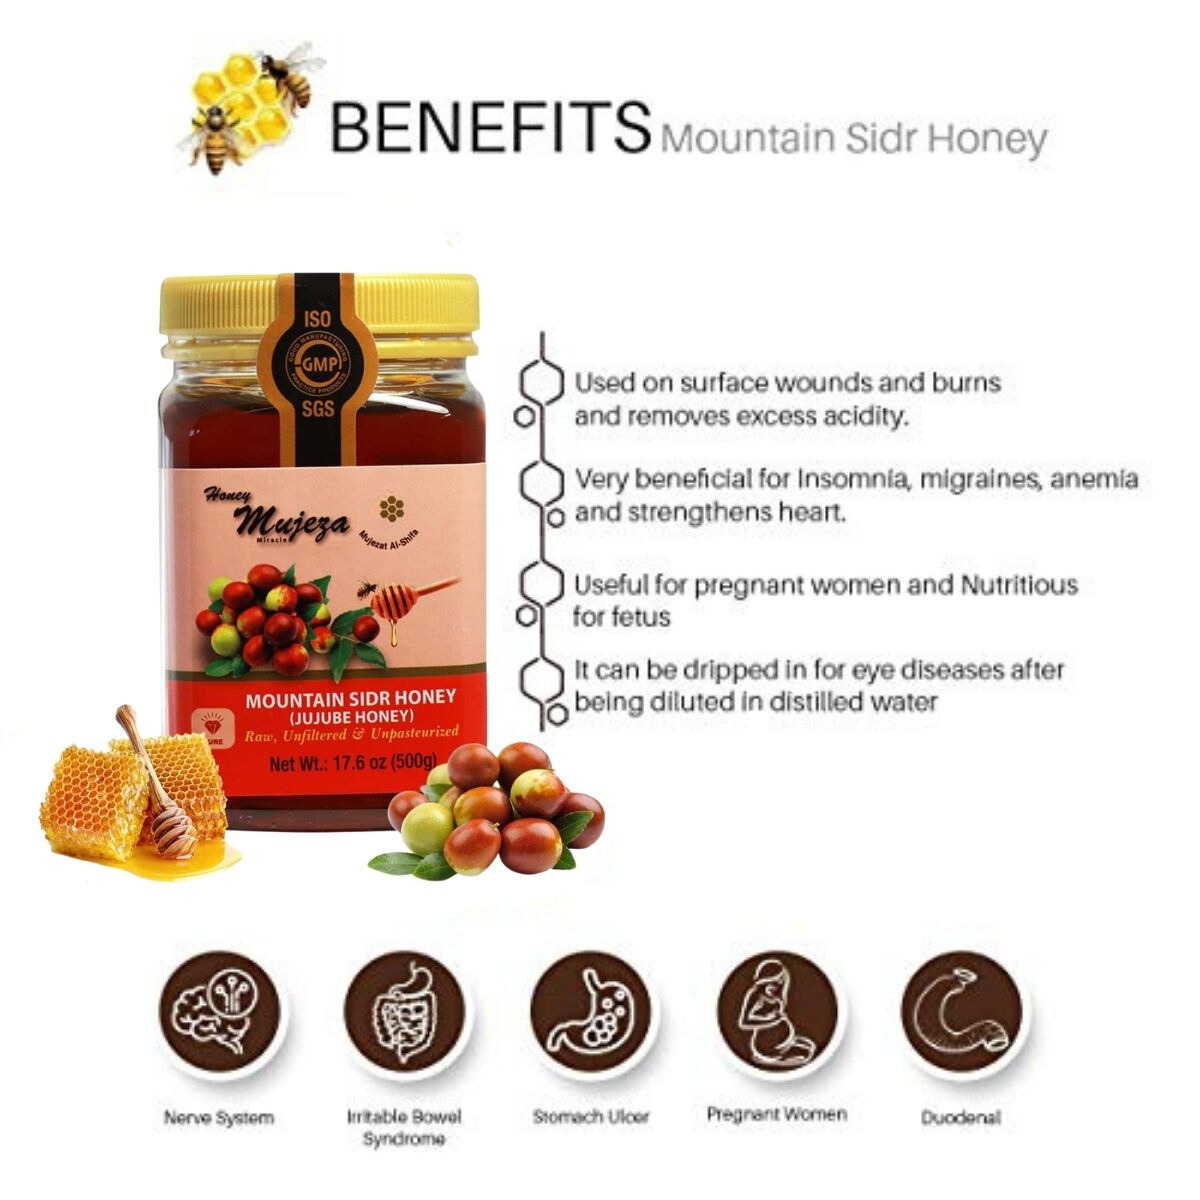 Pure Mountain Sidr Honey " Jujube Honey " - عسل السدر الجبلي الصافي